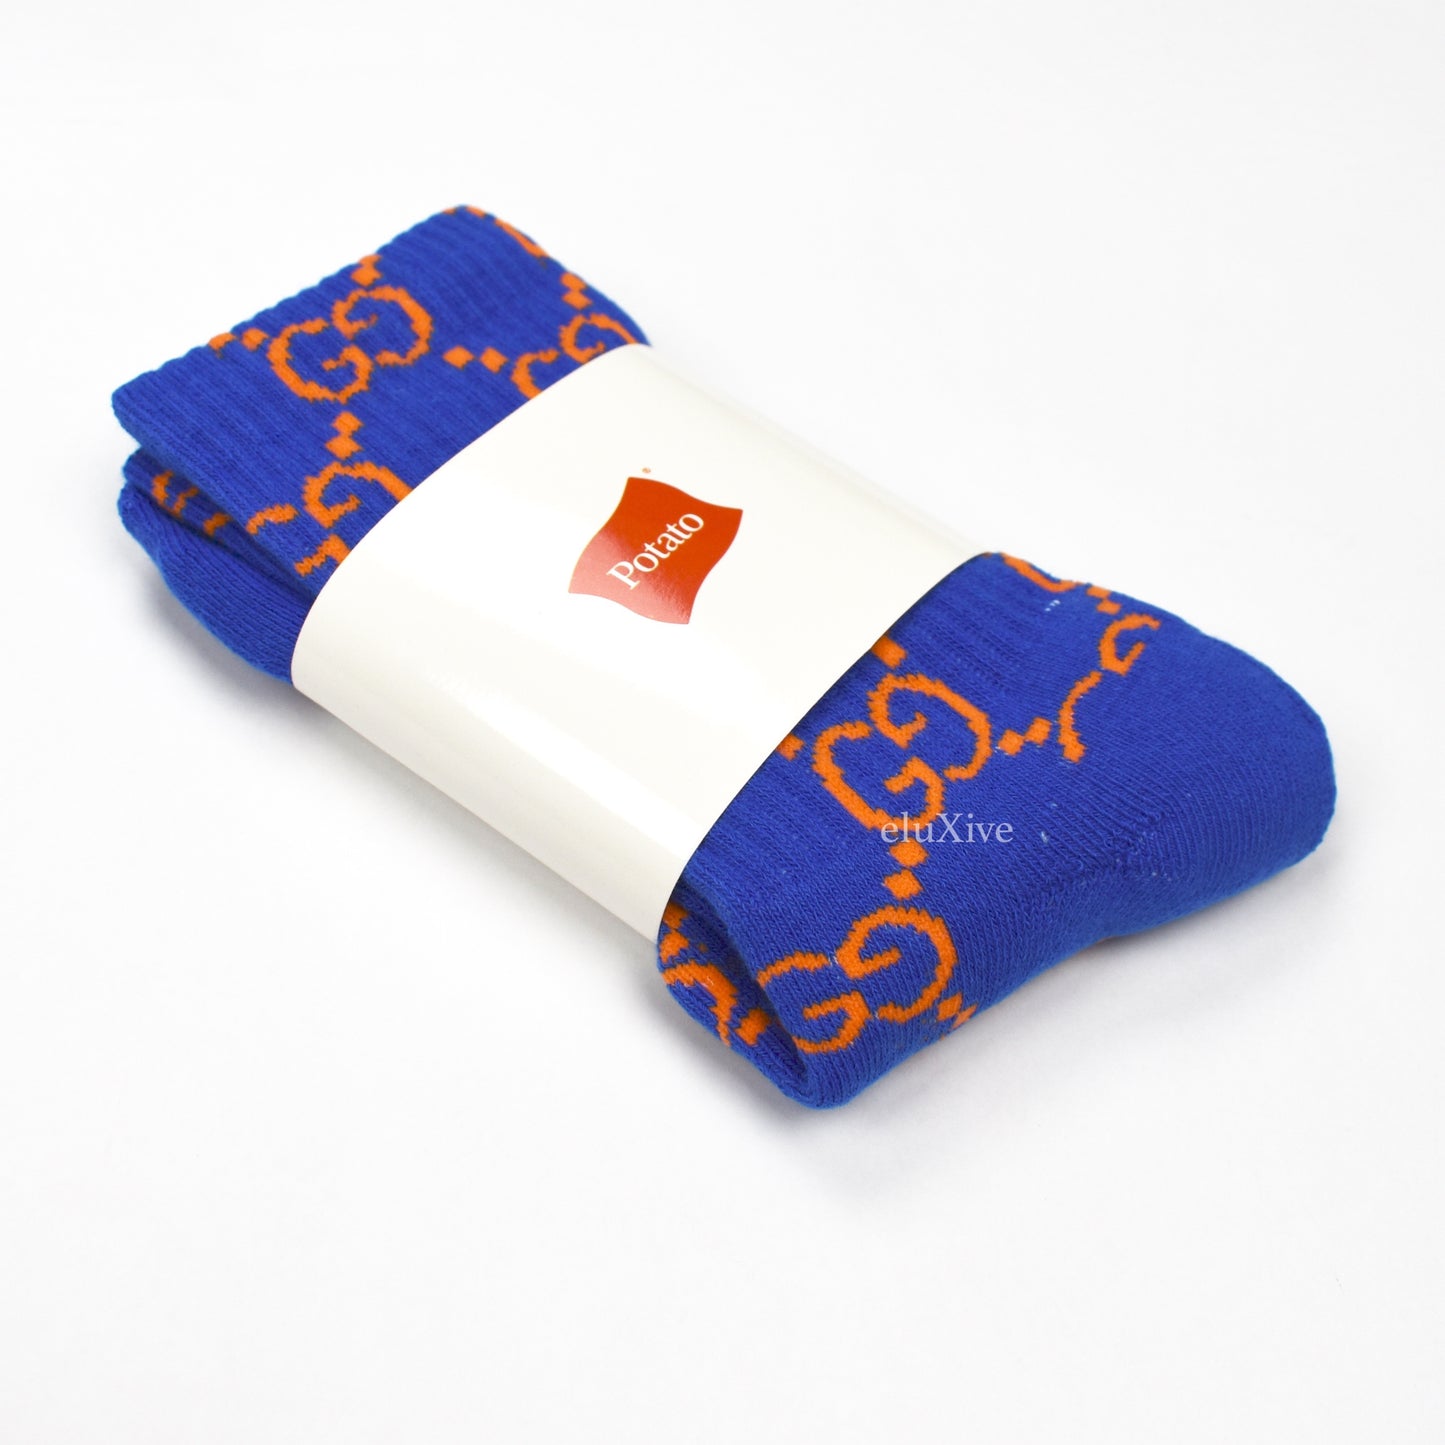 Imran Potato - Blue/Orange 'Gucci' Logo Knit Socks